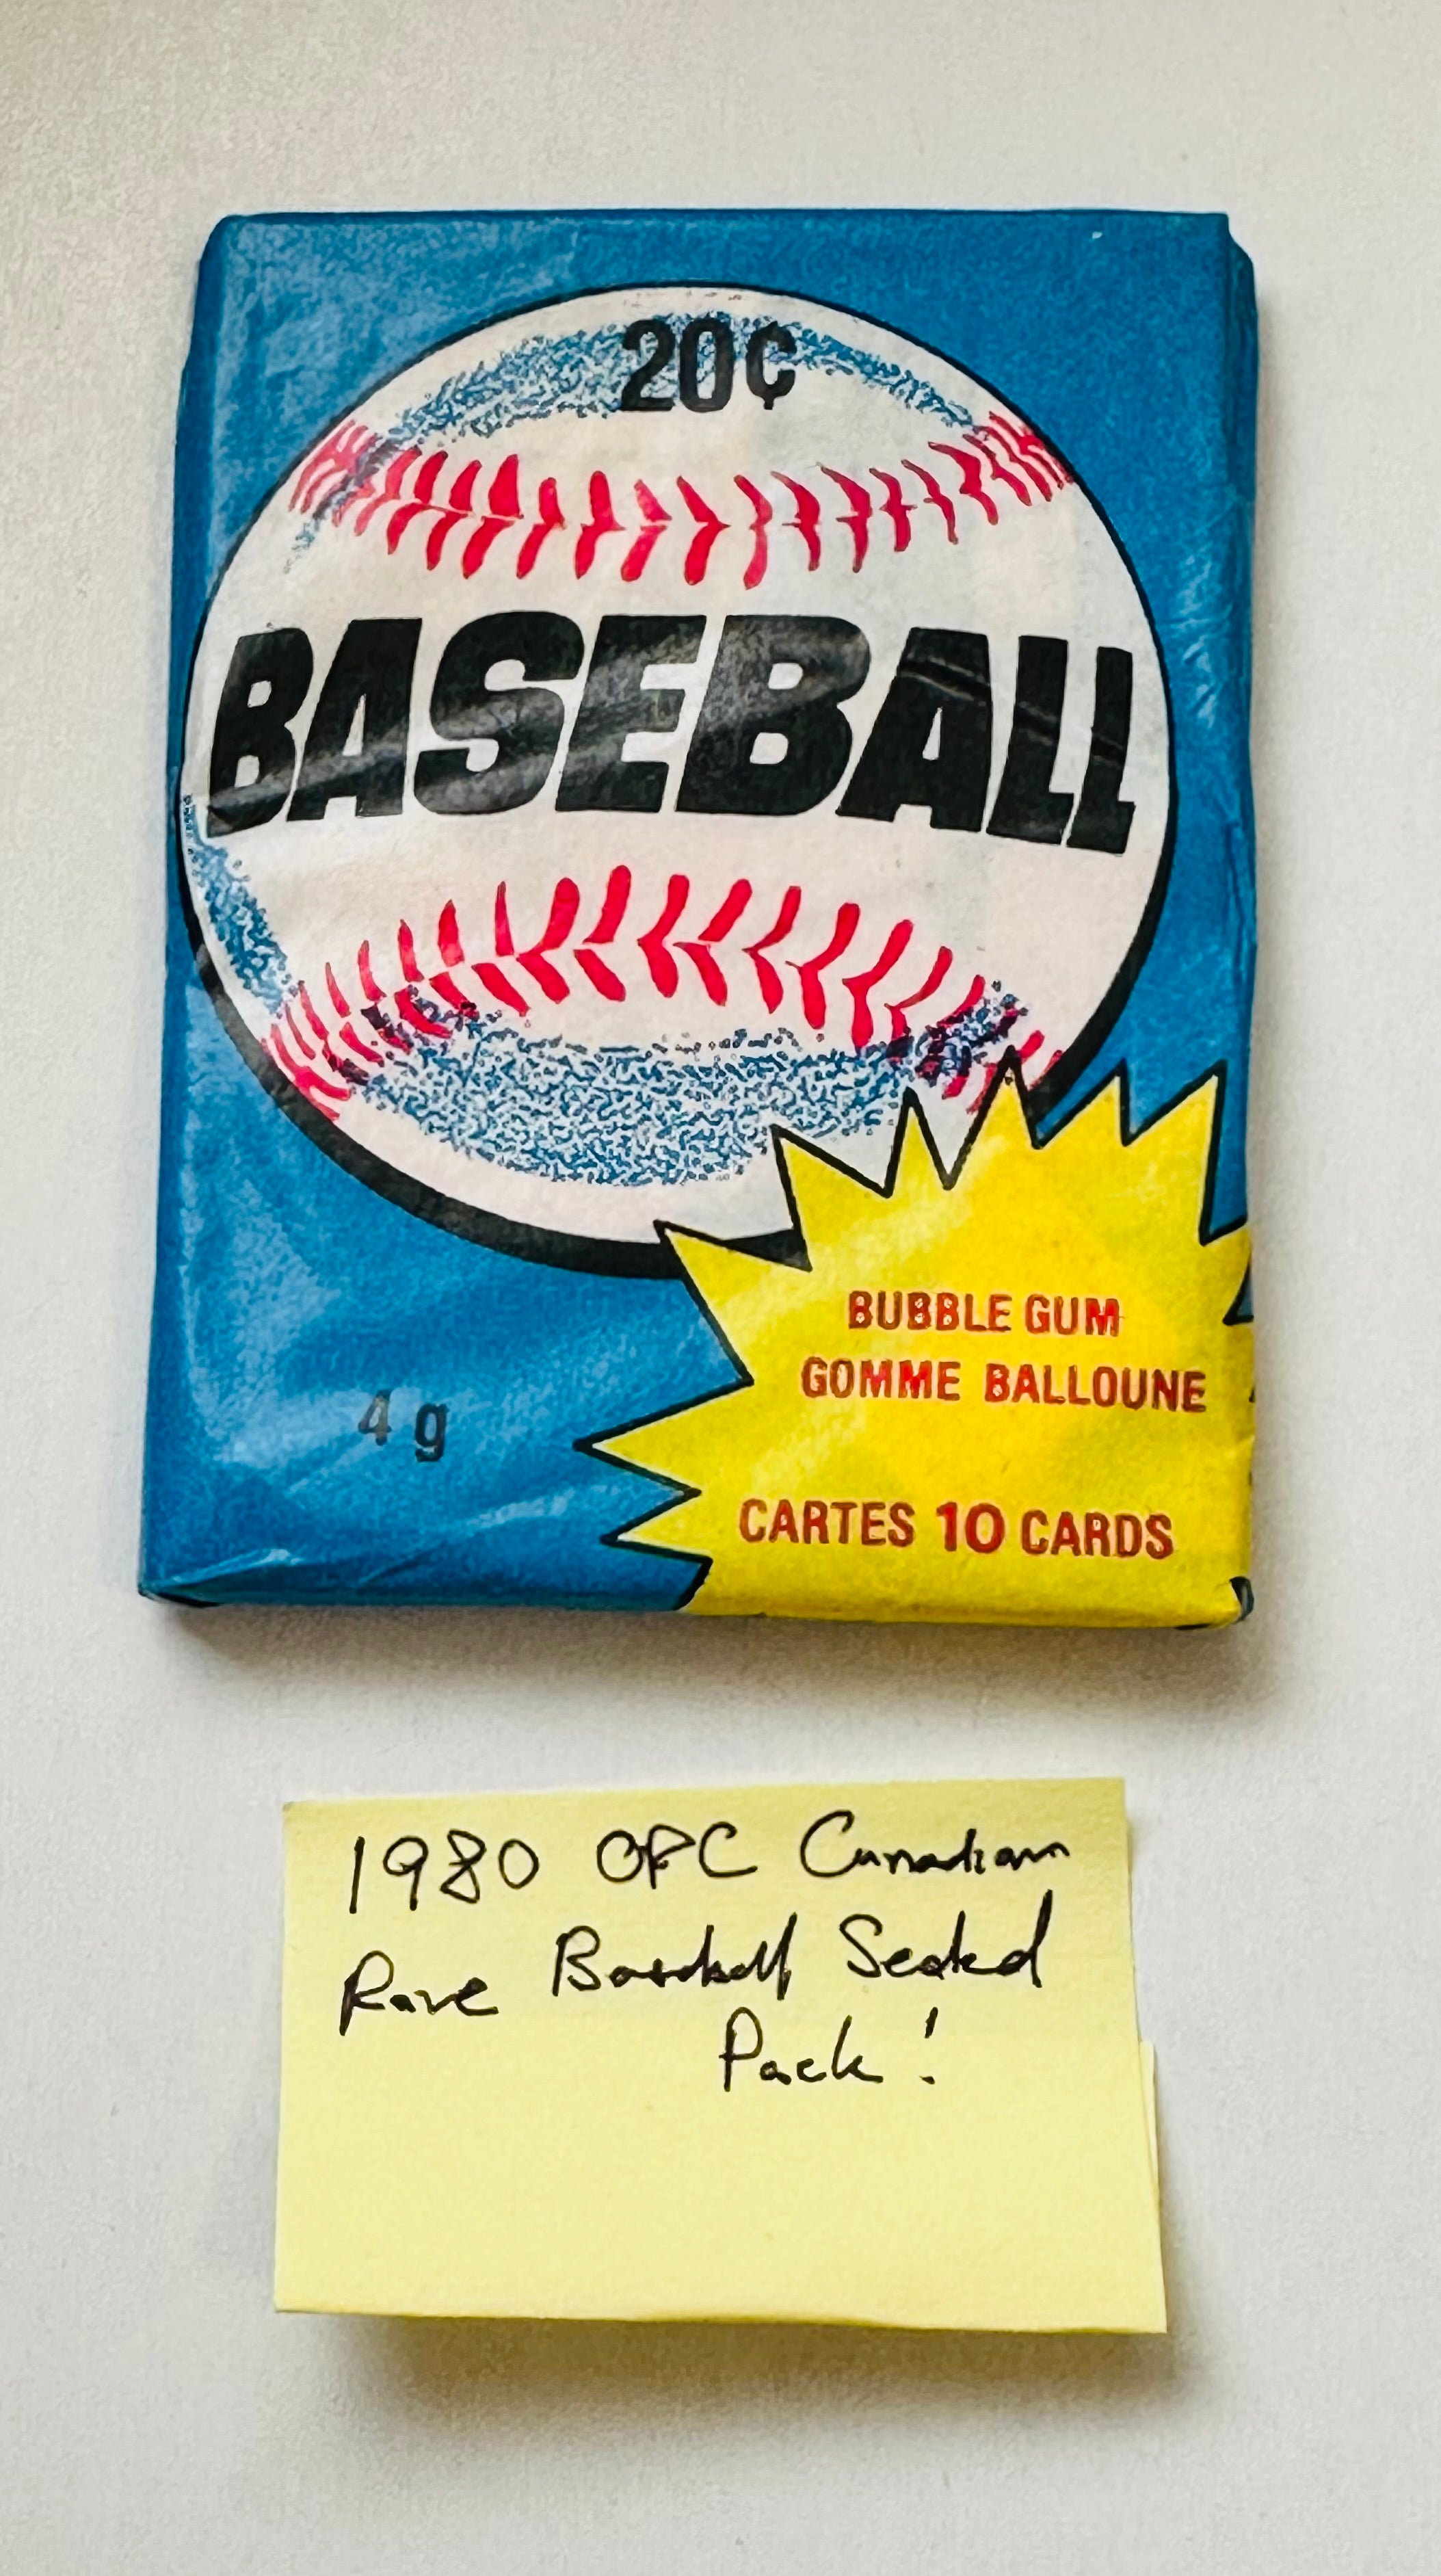 1980 opc Canadian baseball rare sealed pack